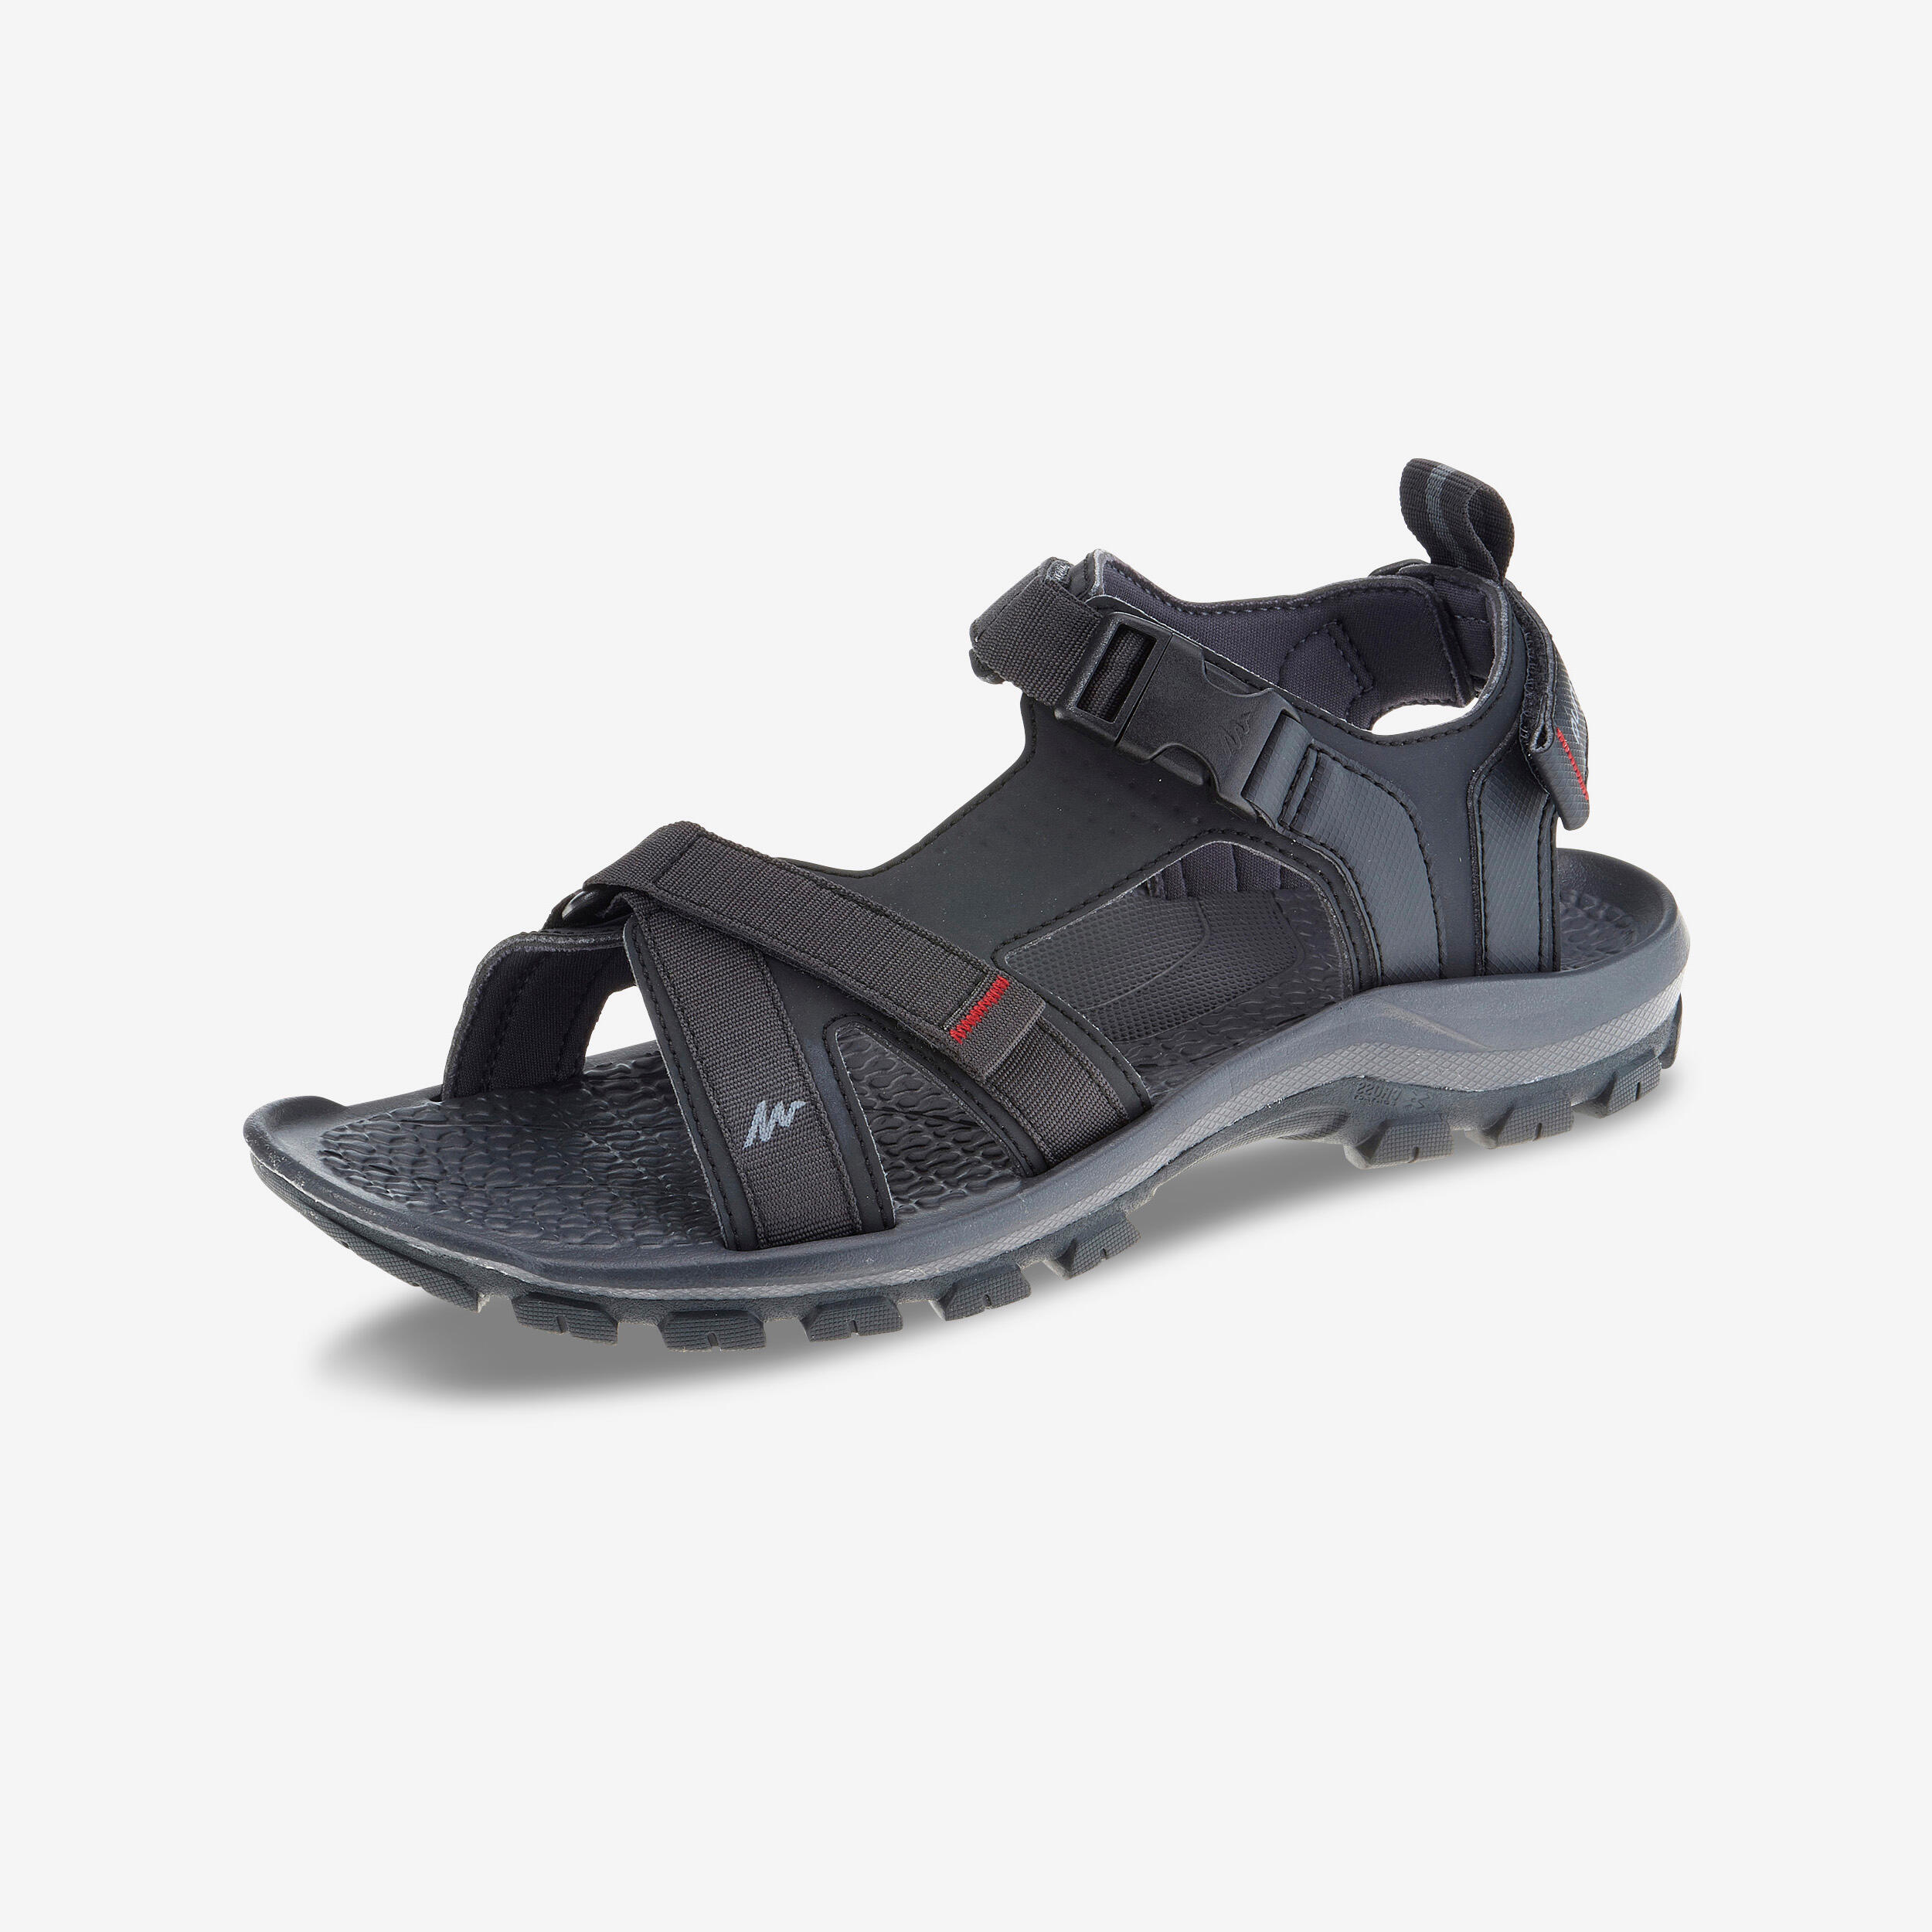 Men's waterproof sandals | Byron bay 2 | Kamik USA